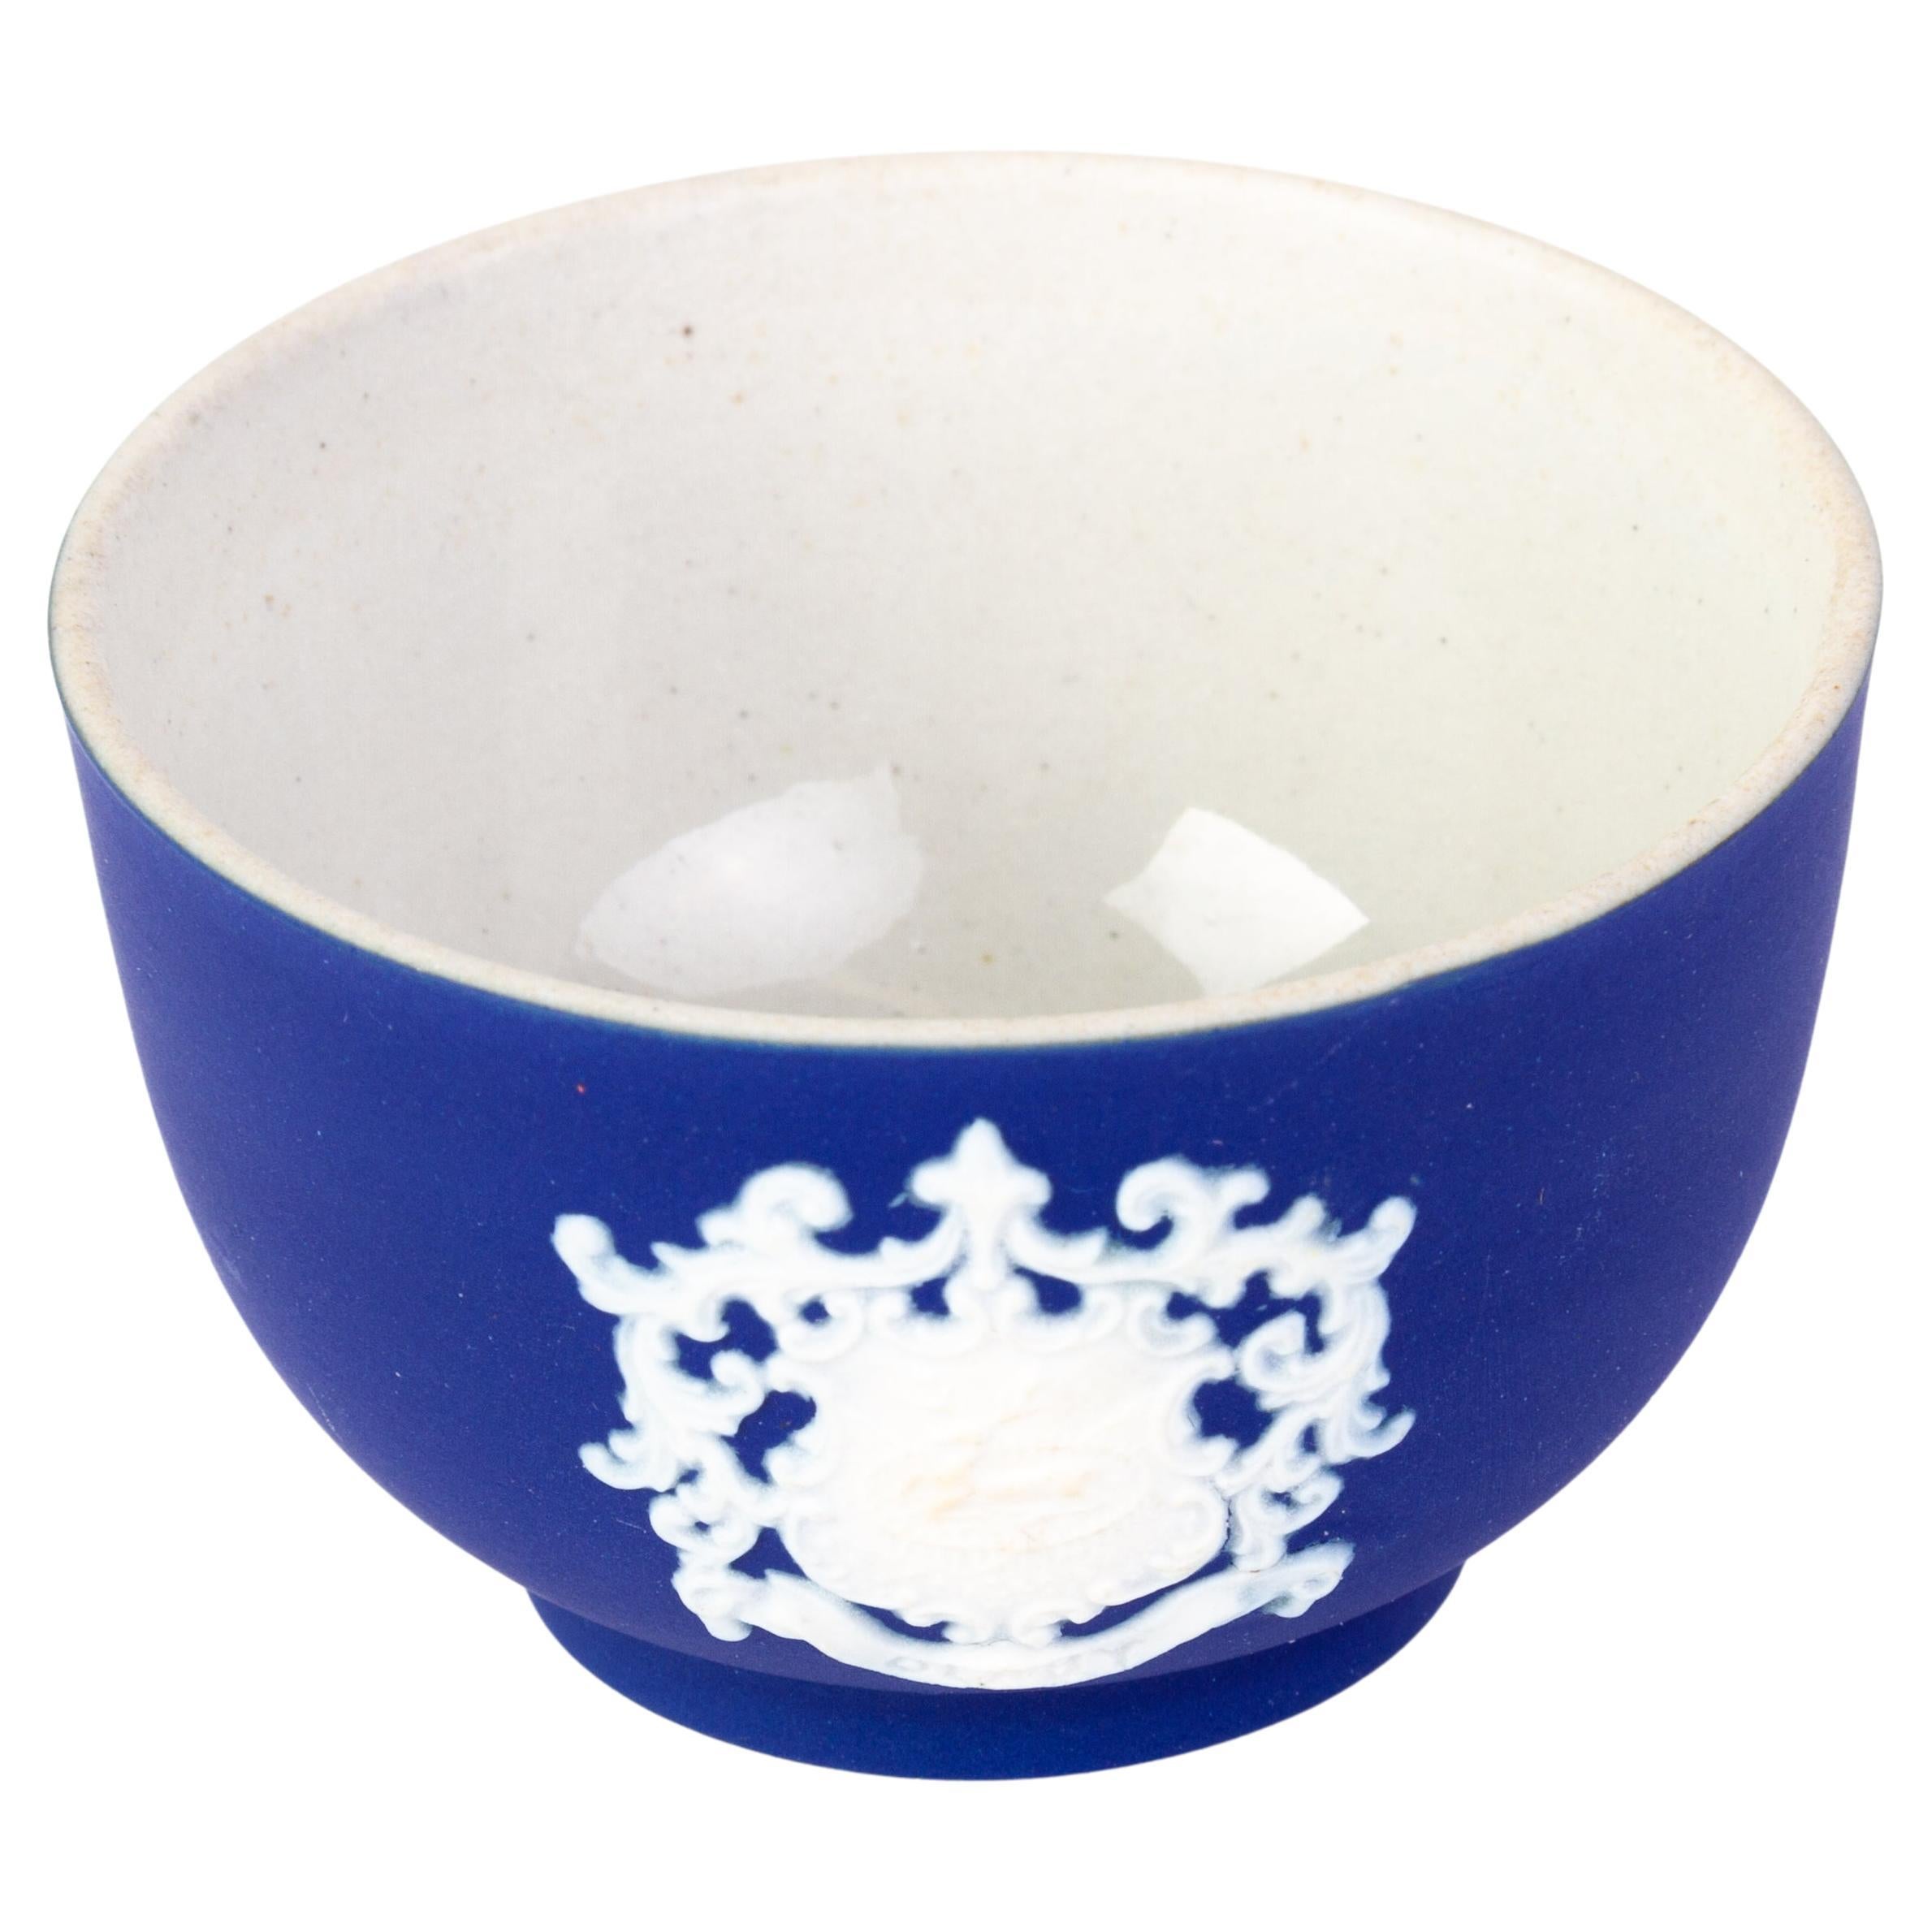 Wedgwood Portland Blue Jasperware Cameo Neoclassical Crested Bowl